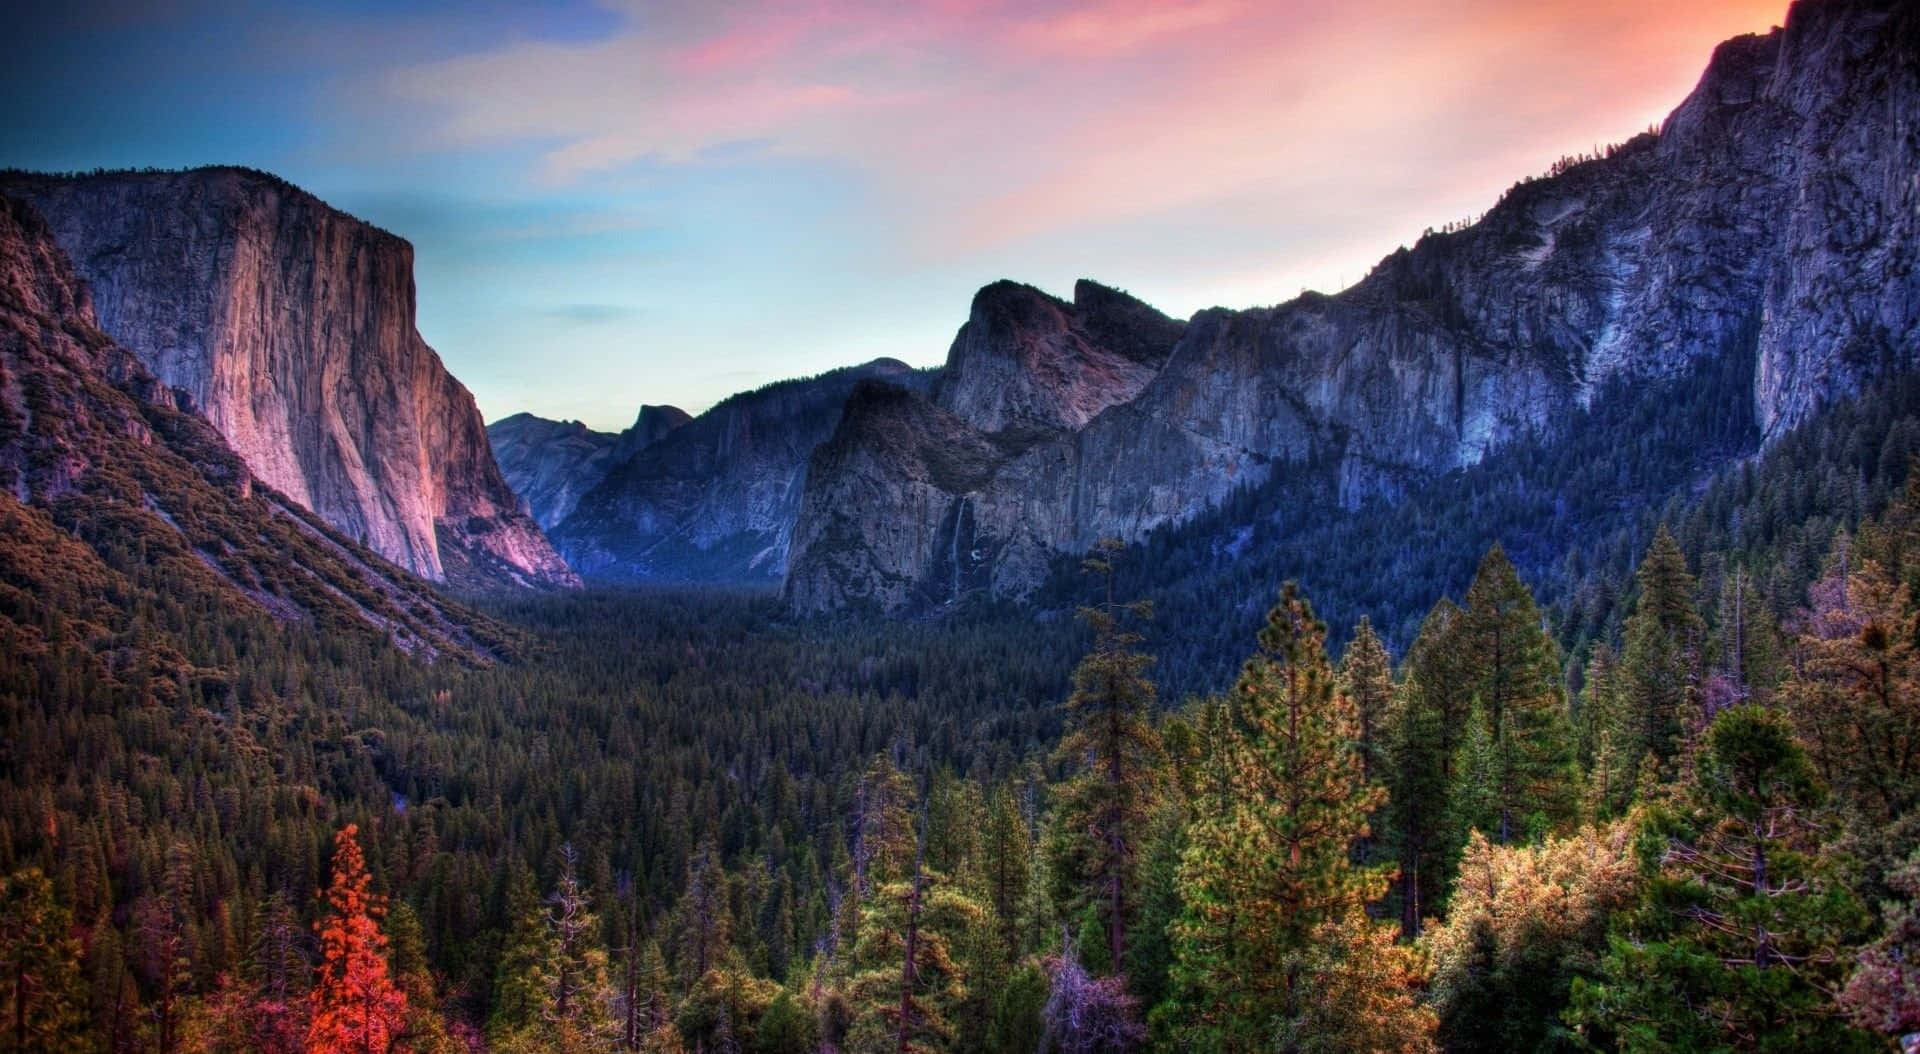 El Capitan Dome-shaped Yosemite Valley Wallpaper